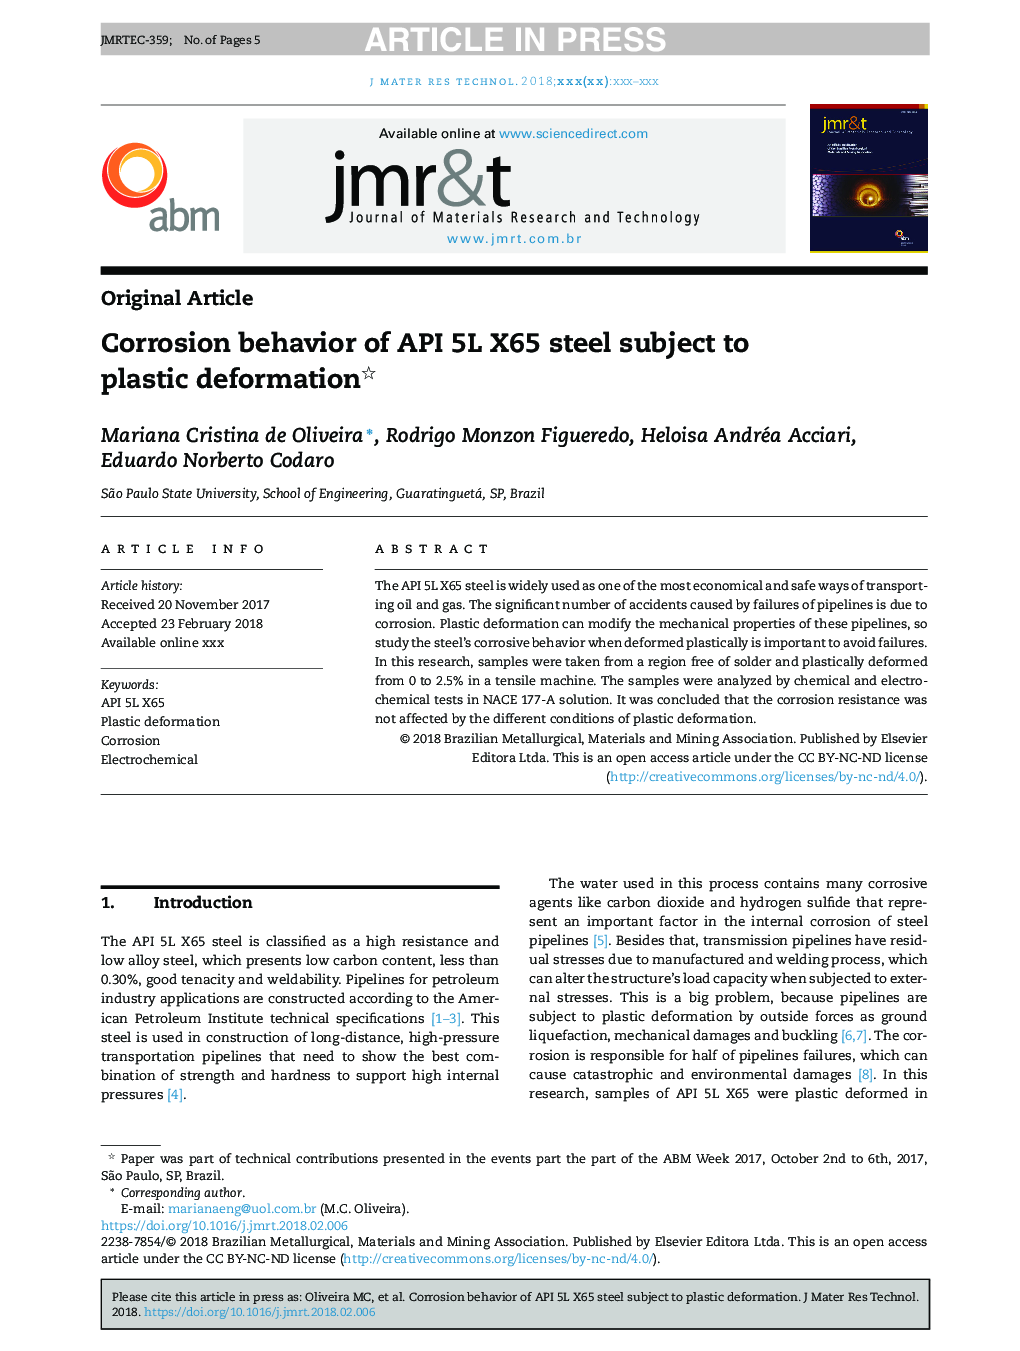 Corrosion behavior of API 5L X65 steel subject to plastic deformation